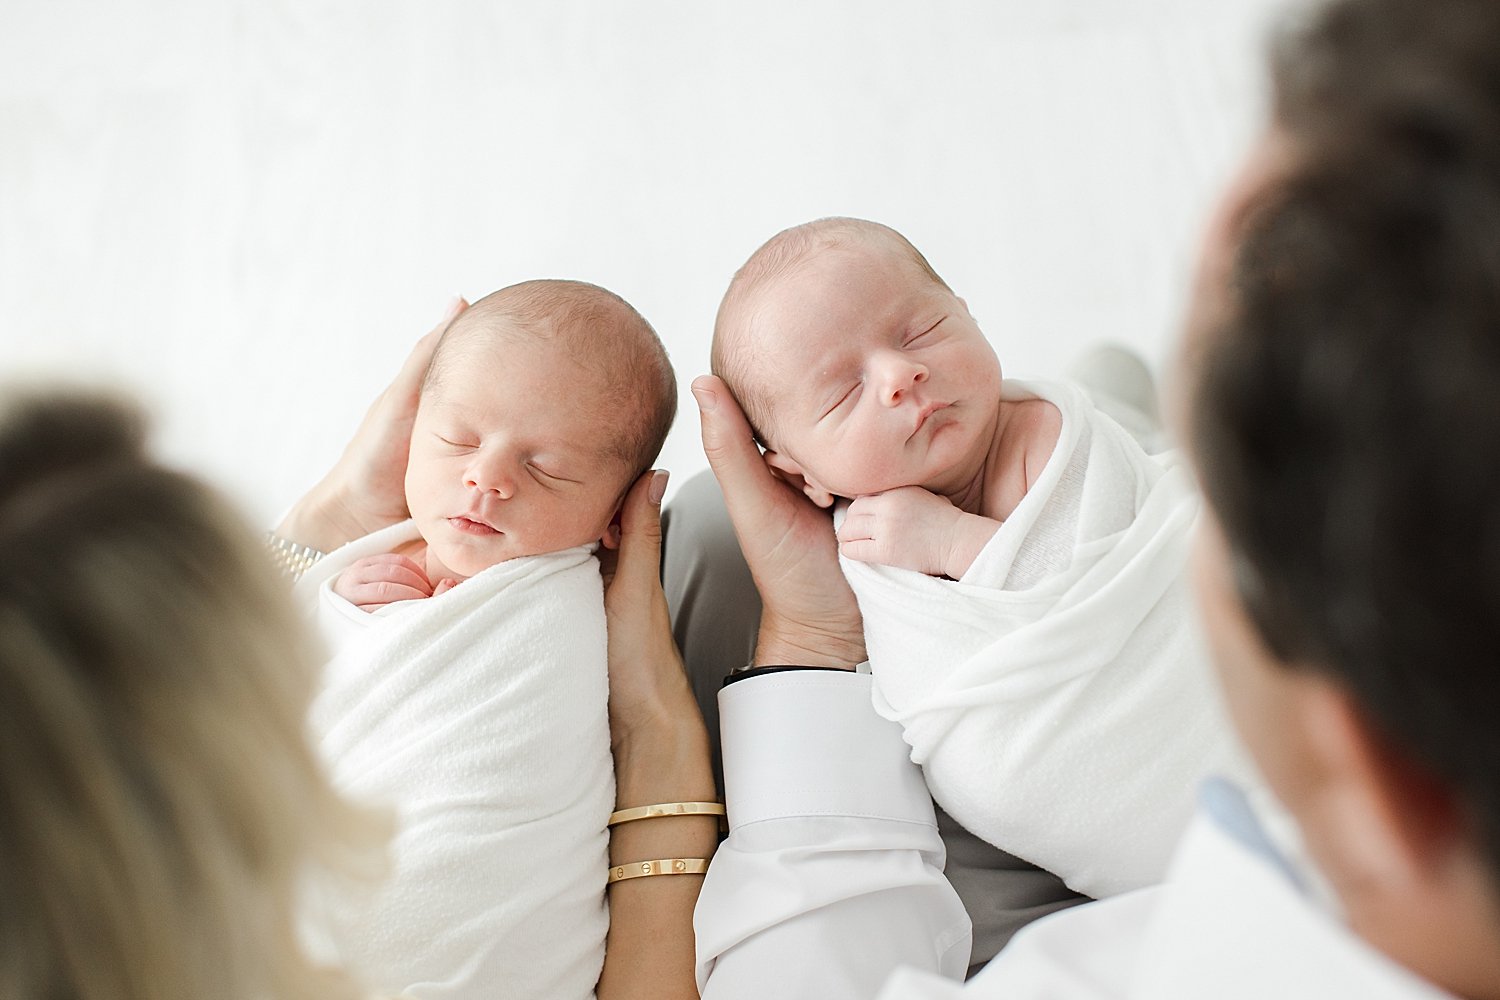 Twin boys newborn session | Kristin Wood Photography